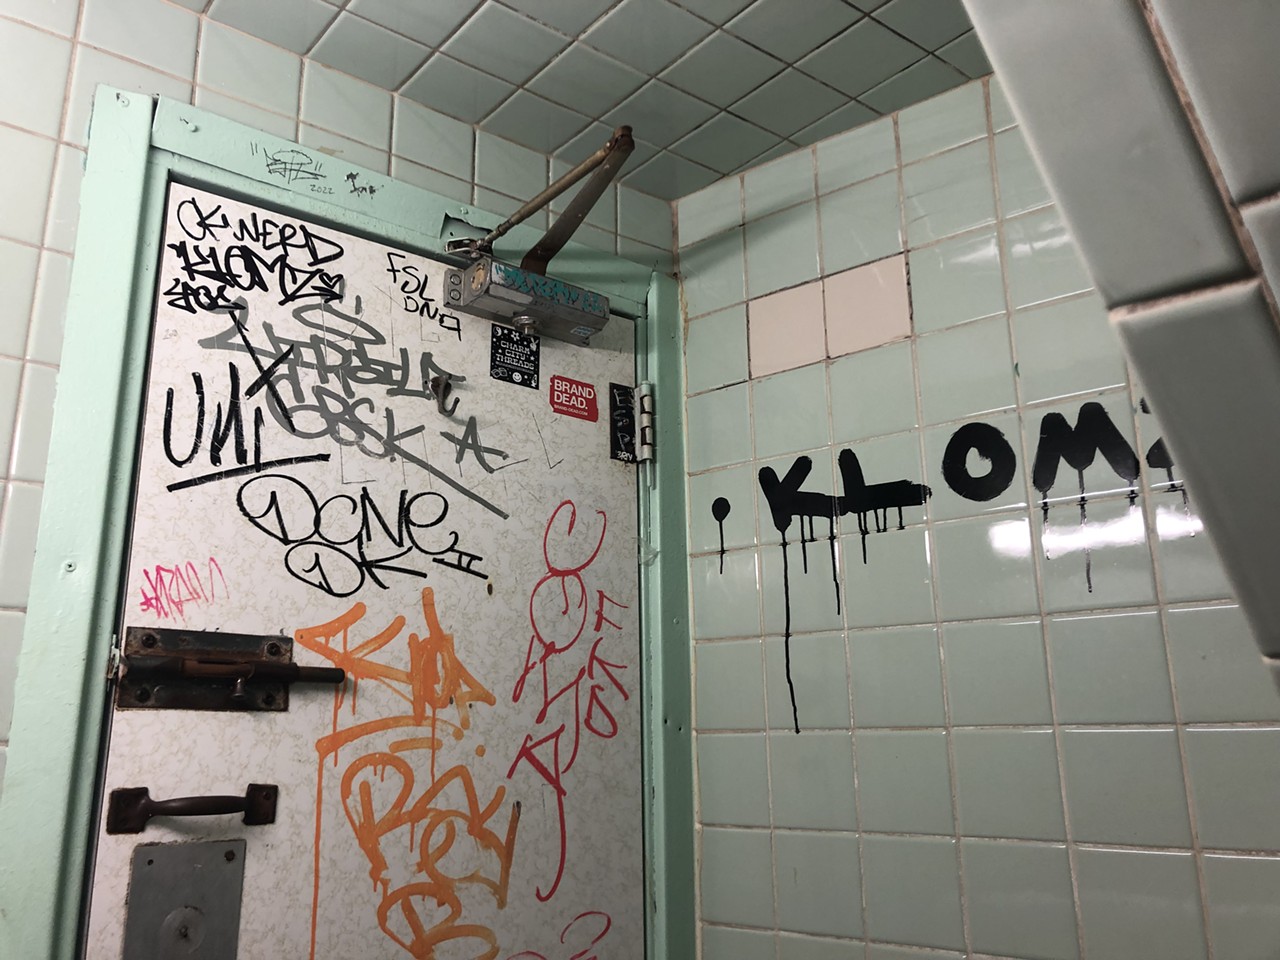 Using the bathroom at Lafayette Coney Island. —@david97bravo